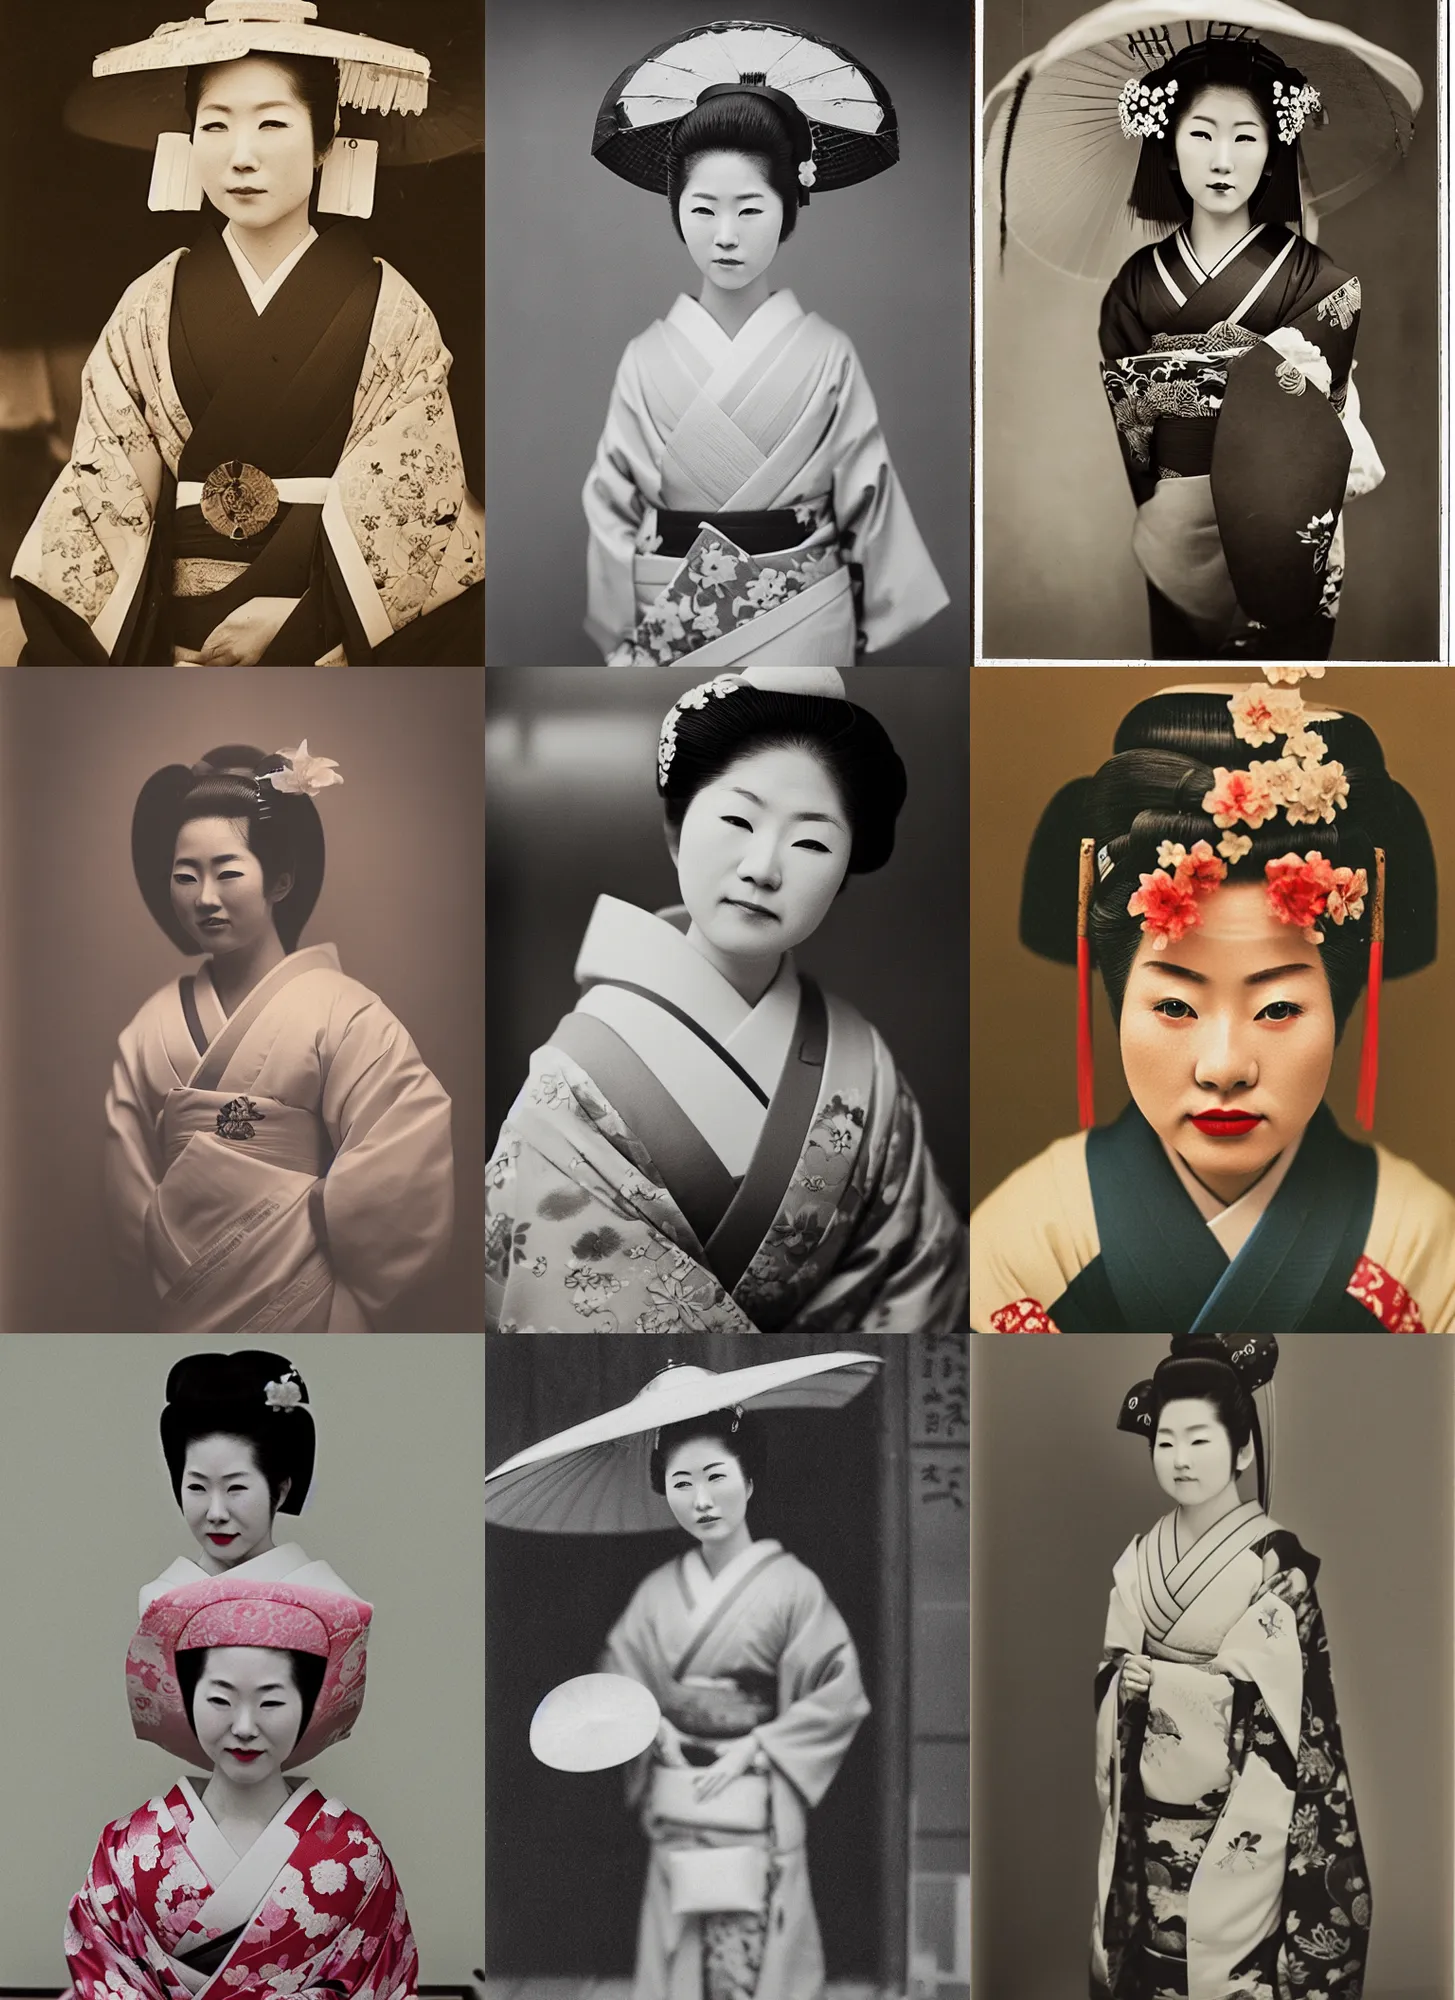 Prompt: Portrait Photograph of a Japanese Geisha Lucky Super 100